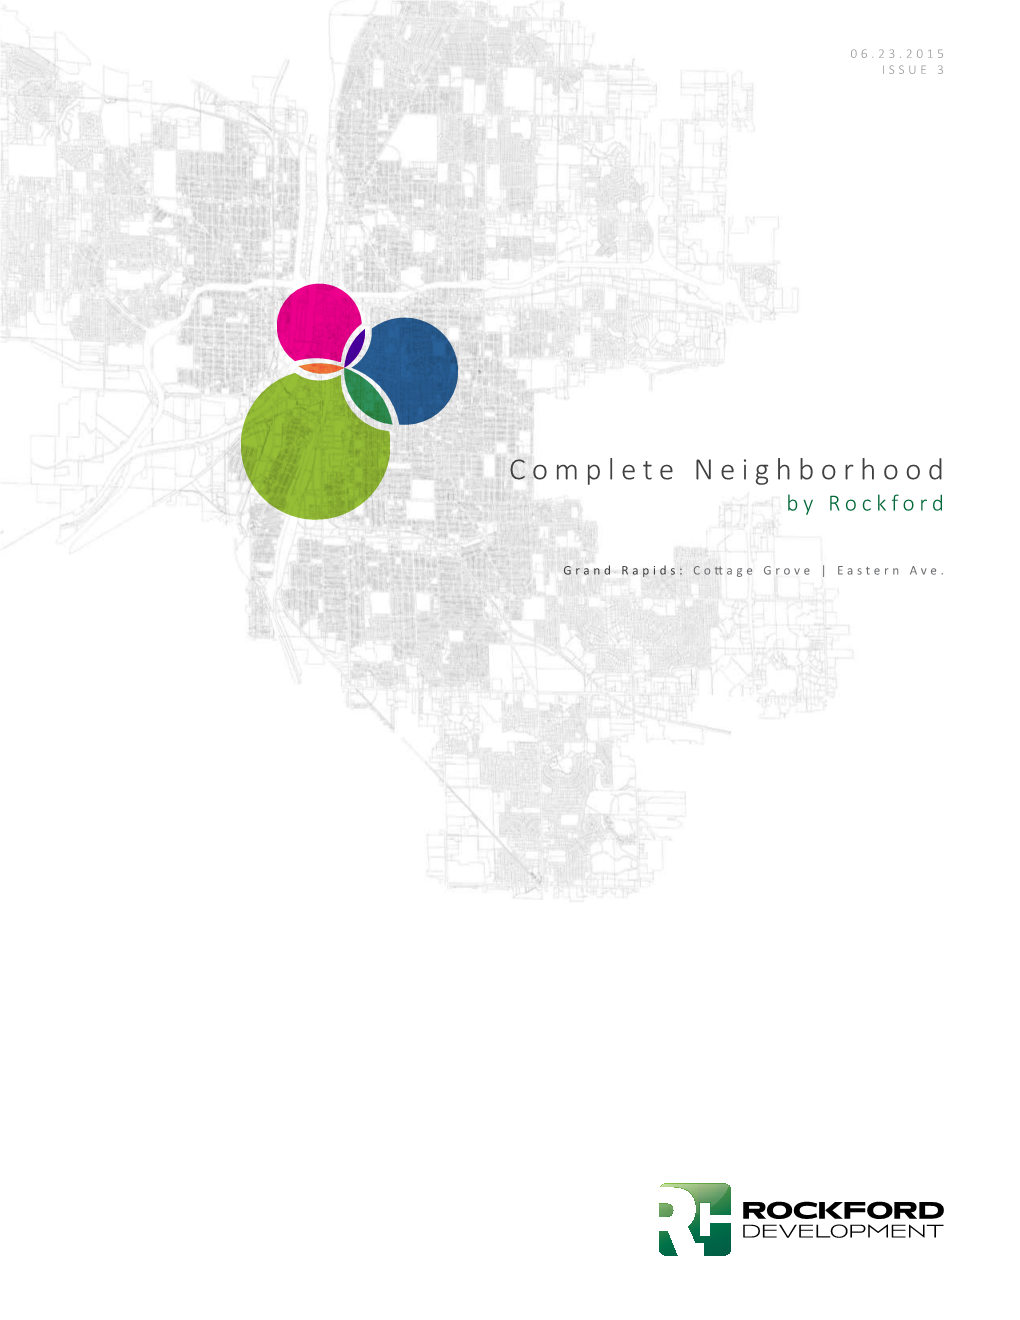 Complete Neighborhood by Rockford